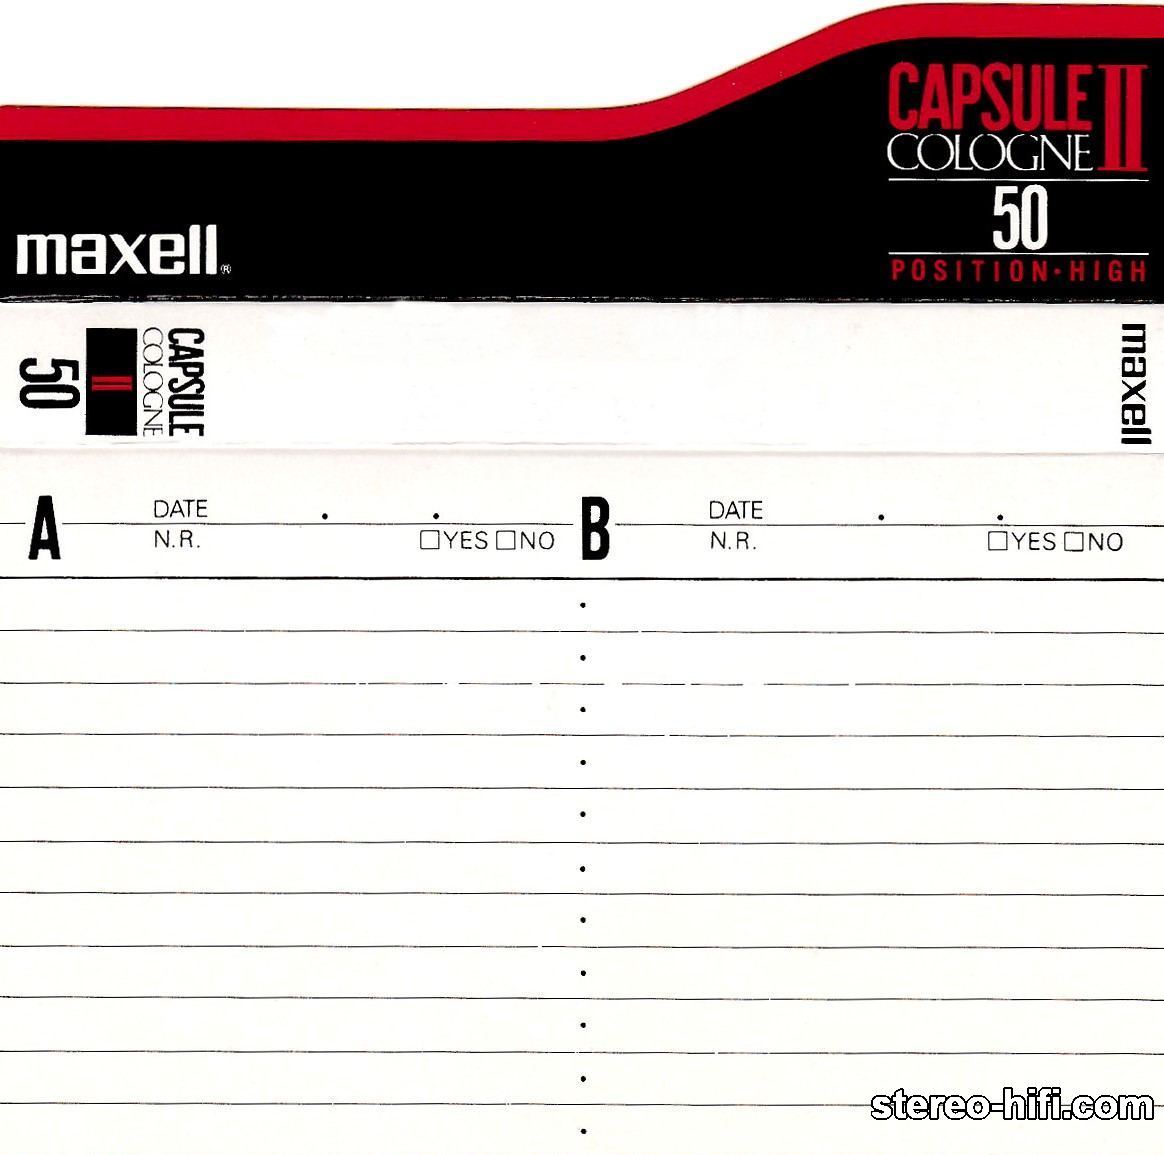 Maxell Capsule Cologne II C50 1990 JP